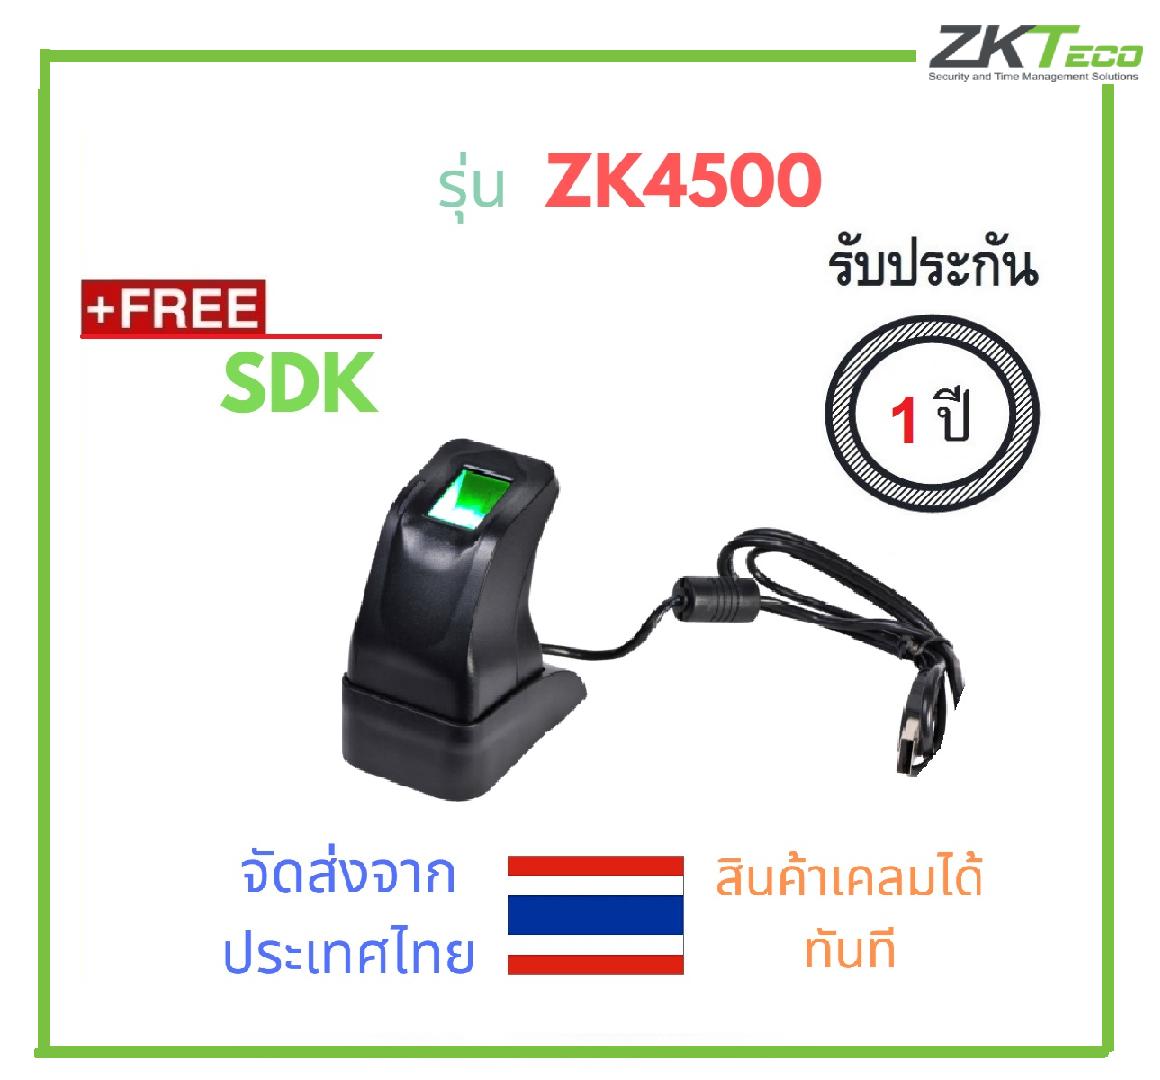 zk4500 device info